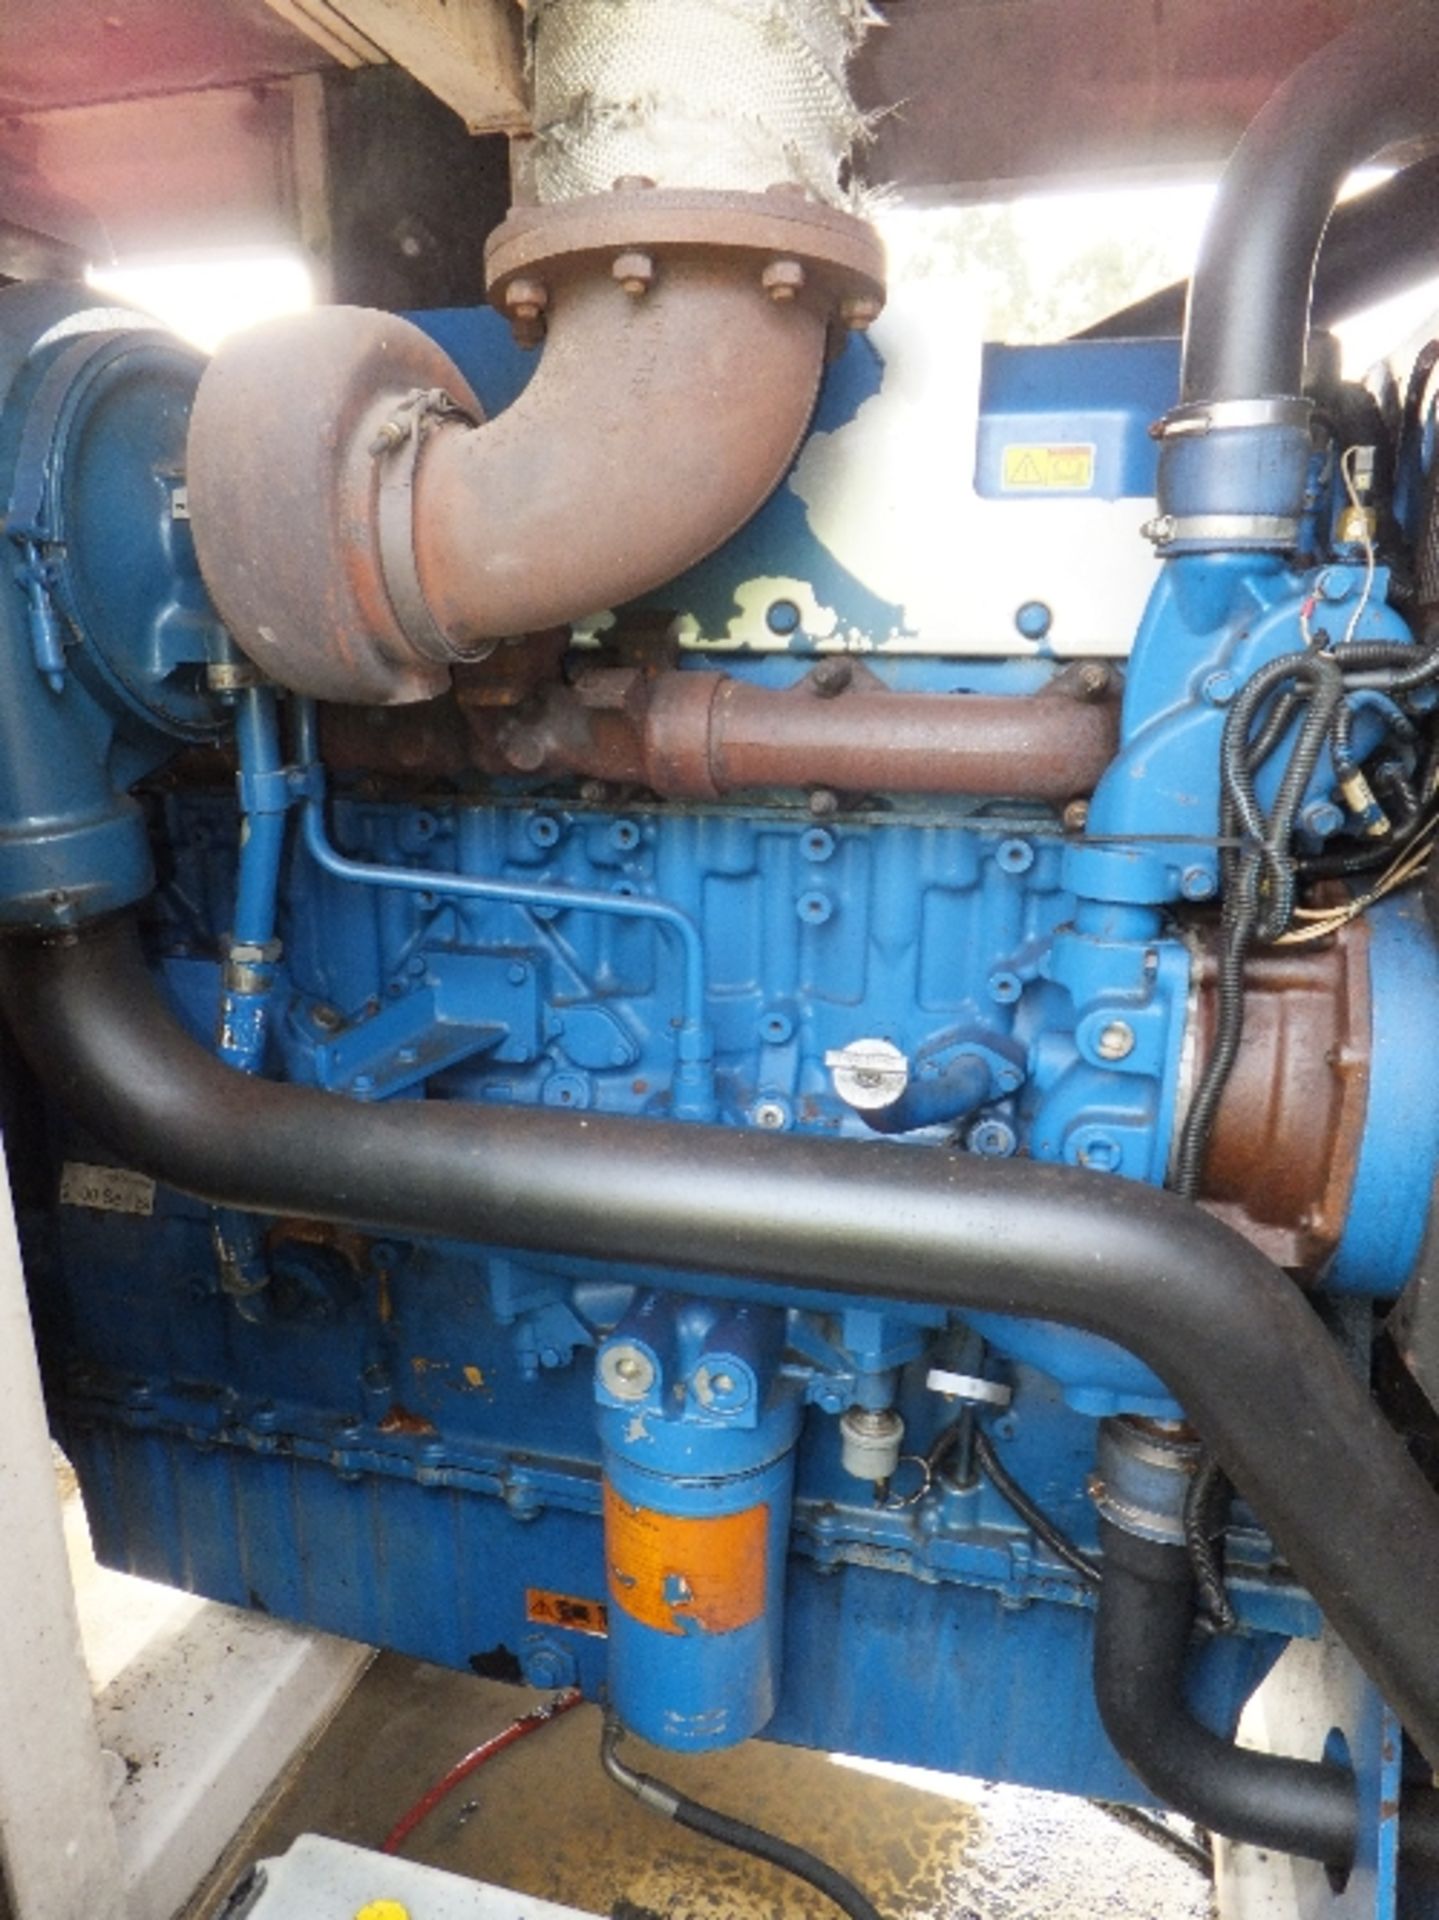 FG Wilson 500kva generator (2007) Fuel line removed, no cover on alternator - Image 8 of 8